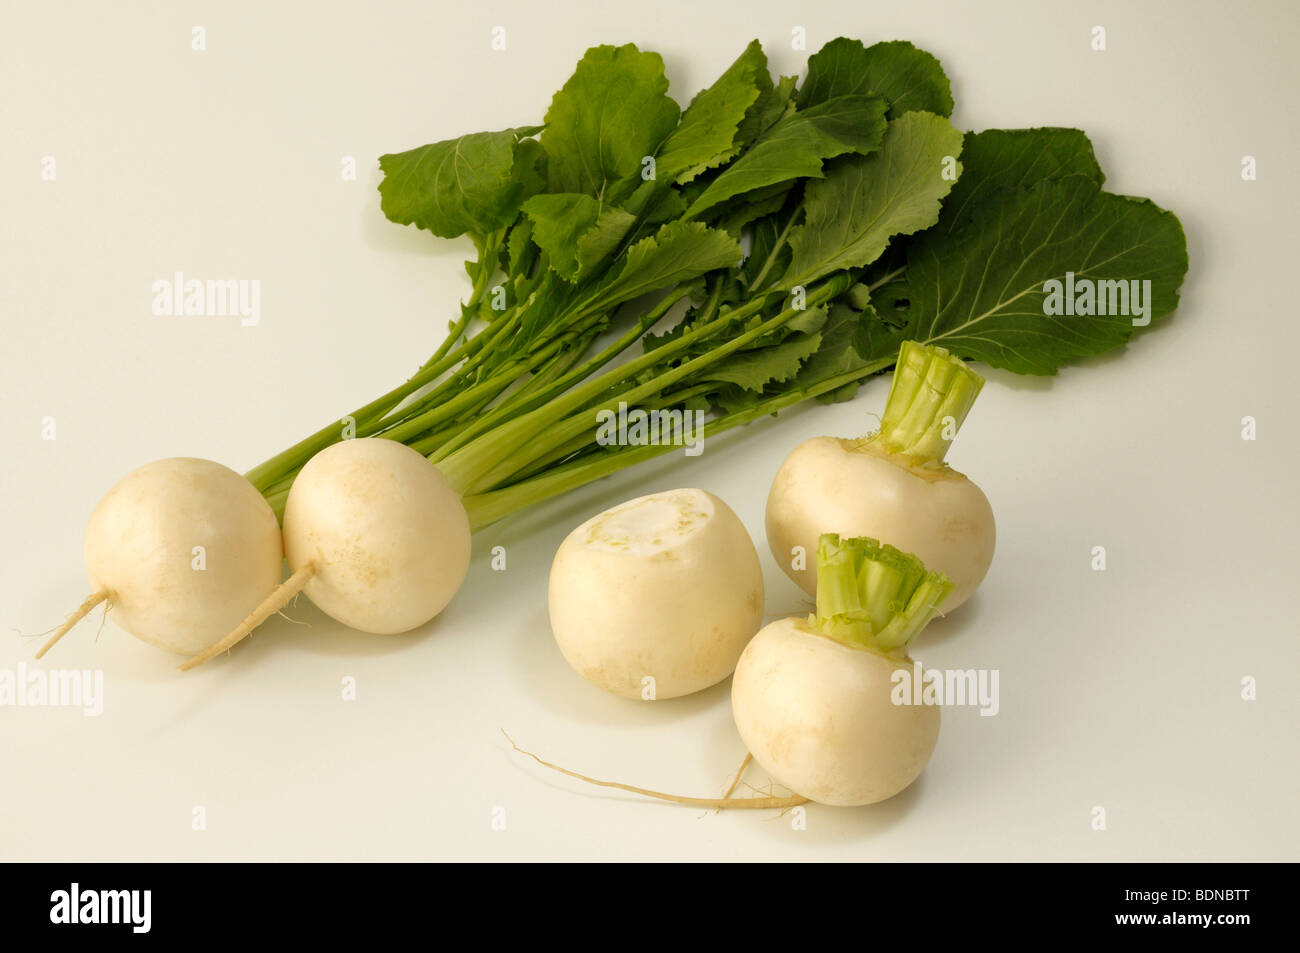 White Turnip (Brassica rapa var.rapa majalis), beets, studio picture. Stock Photo